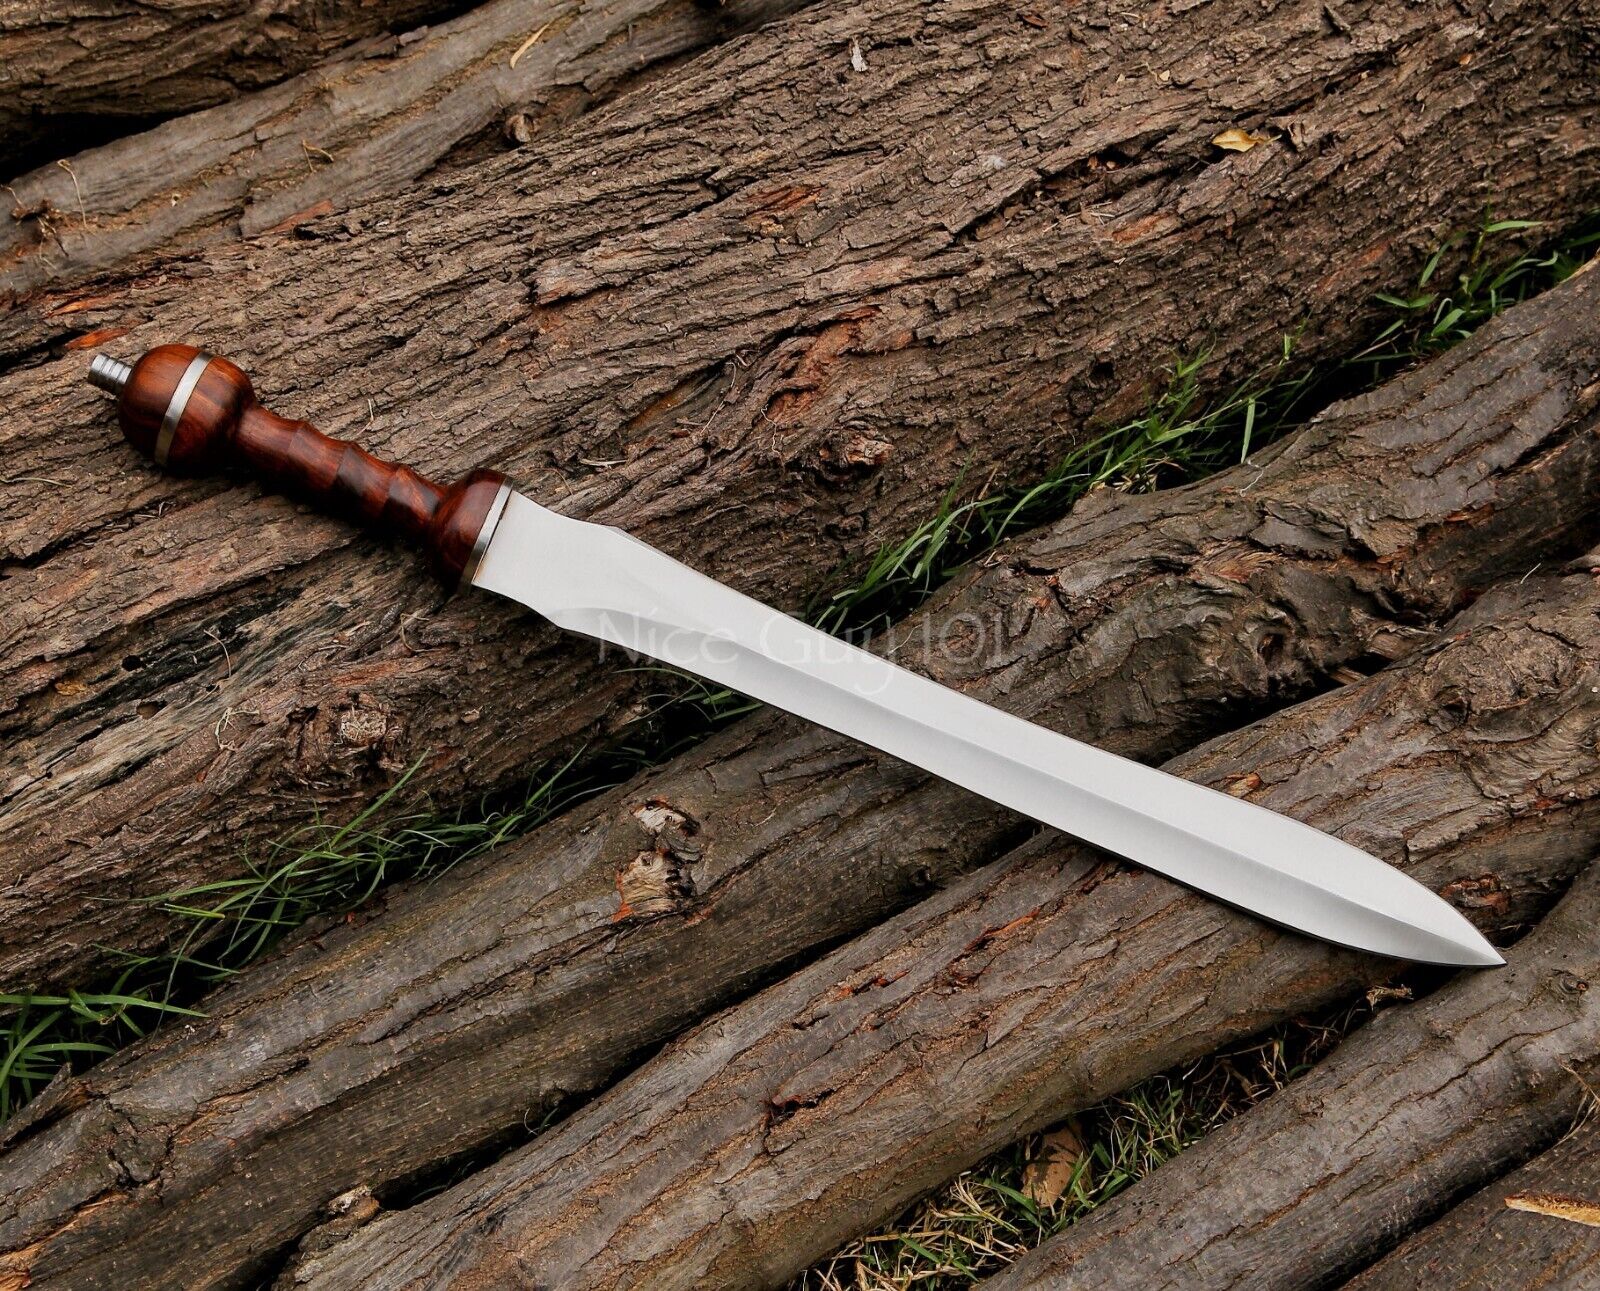 Legion Gladiator Roman Gladius Sword Handmade 1095 High Carbon Steel Blade